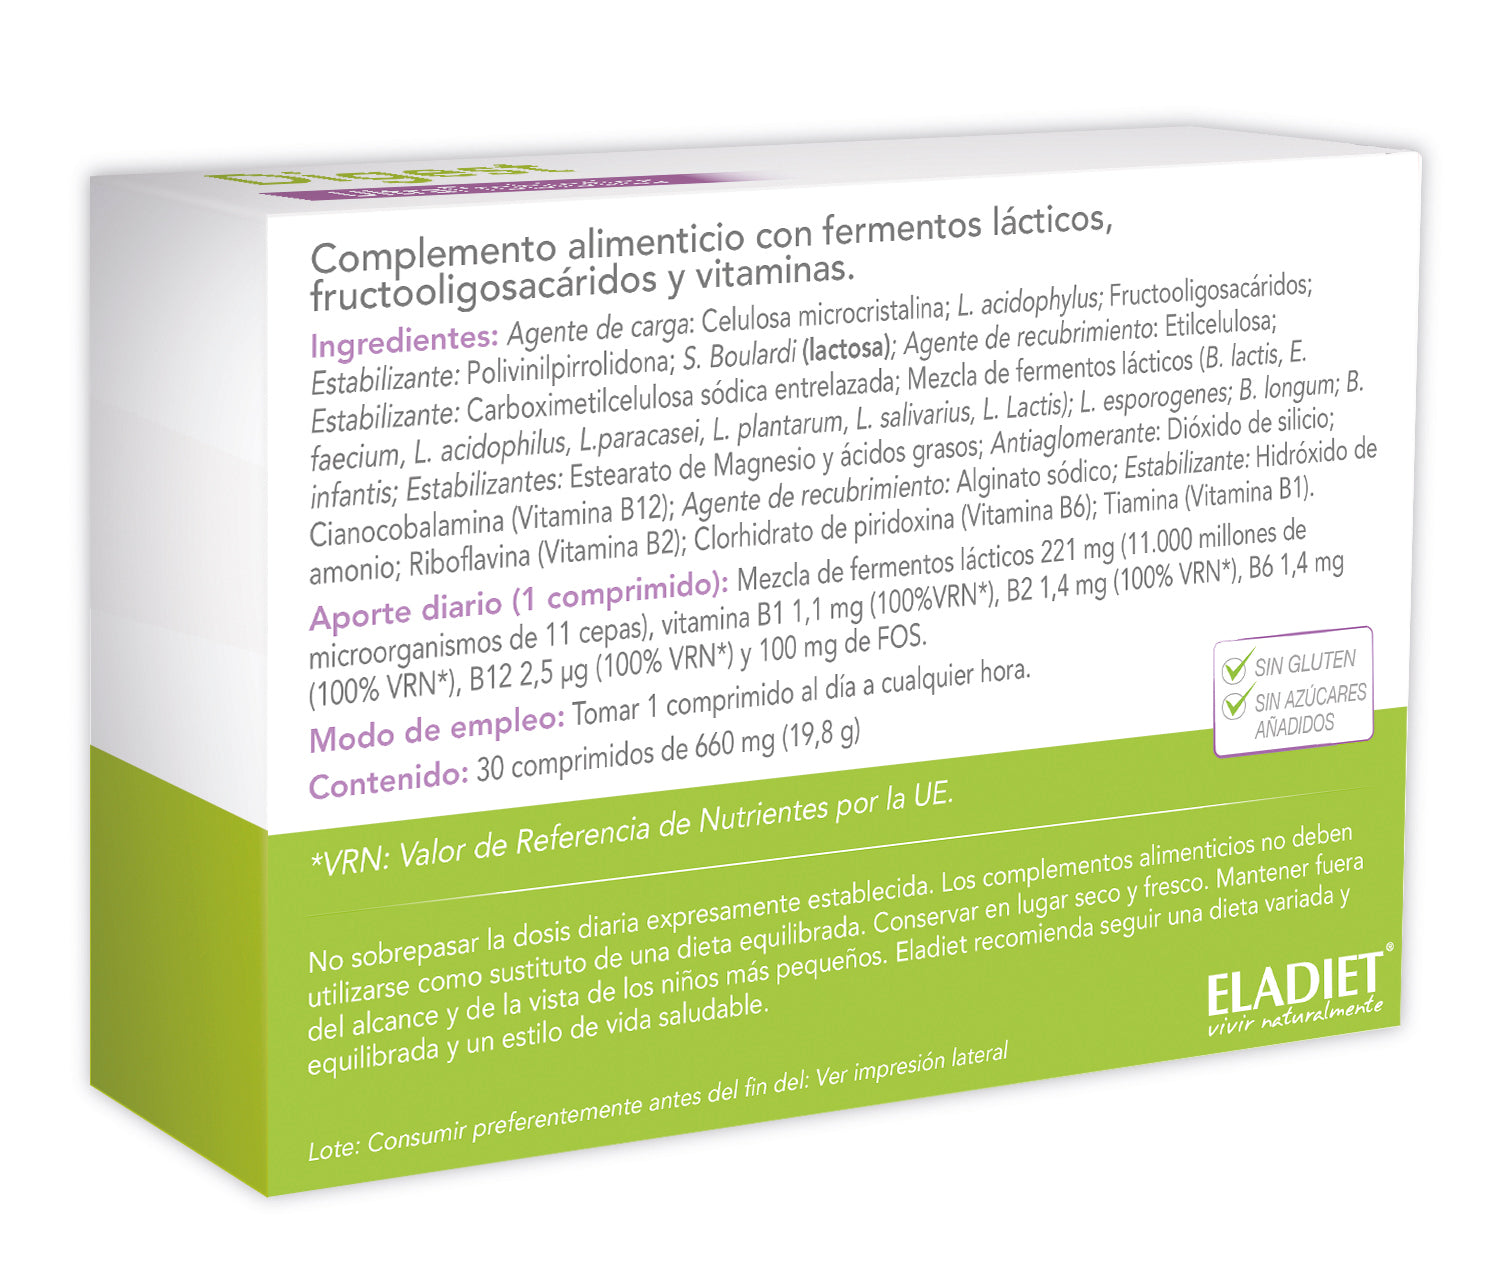 Eladiet - Digest Ultrabiotics 30 Comprimidos - Biopharmacia, Parafarmacia online